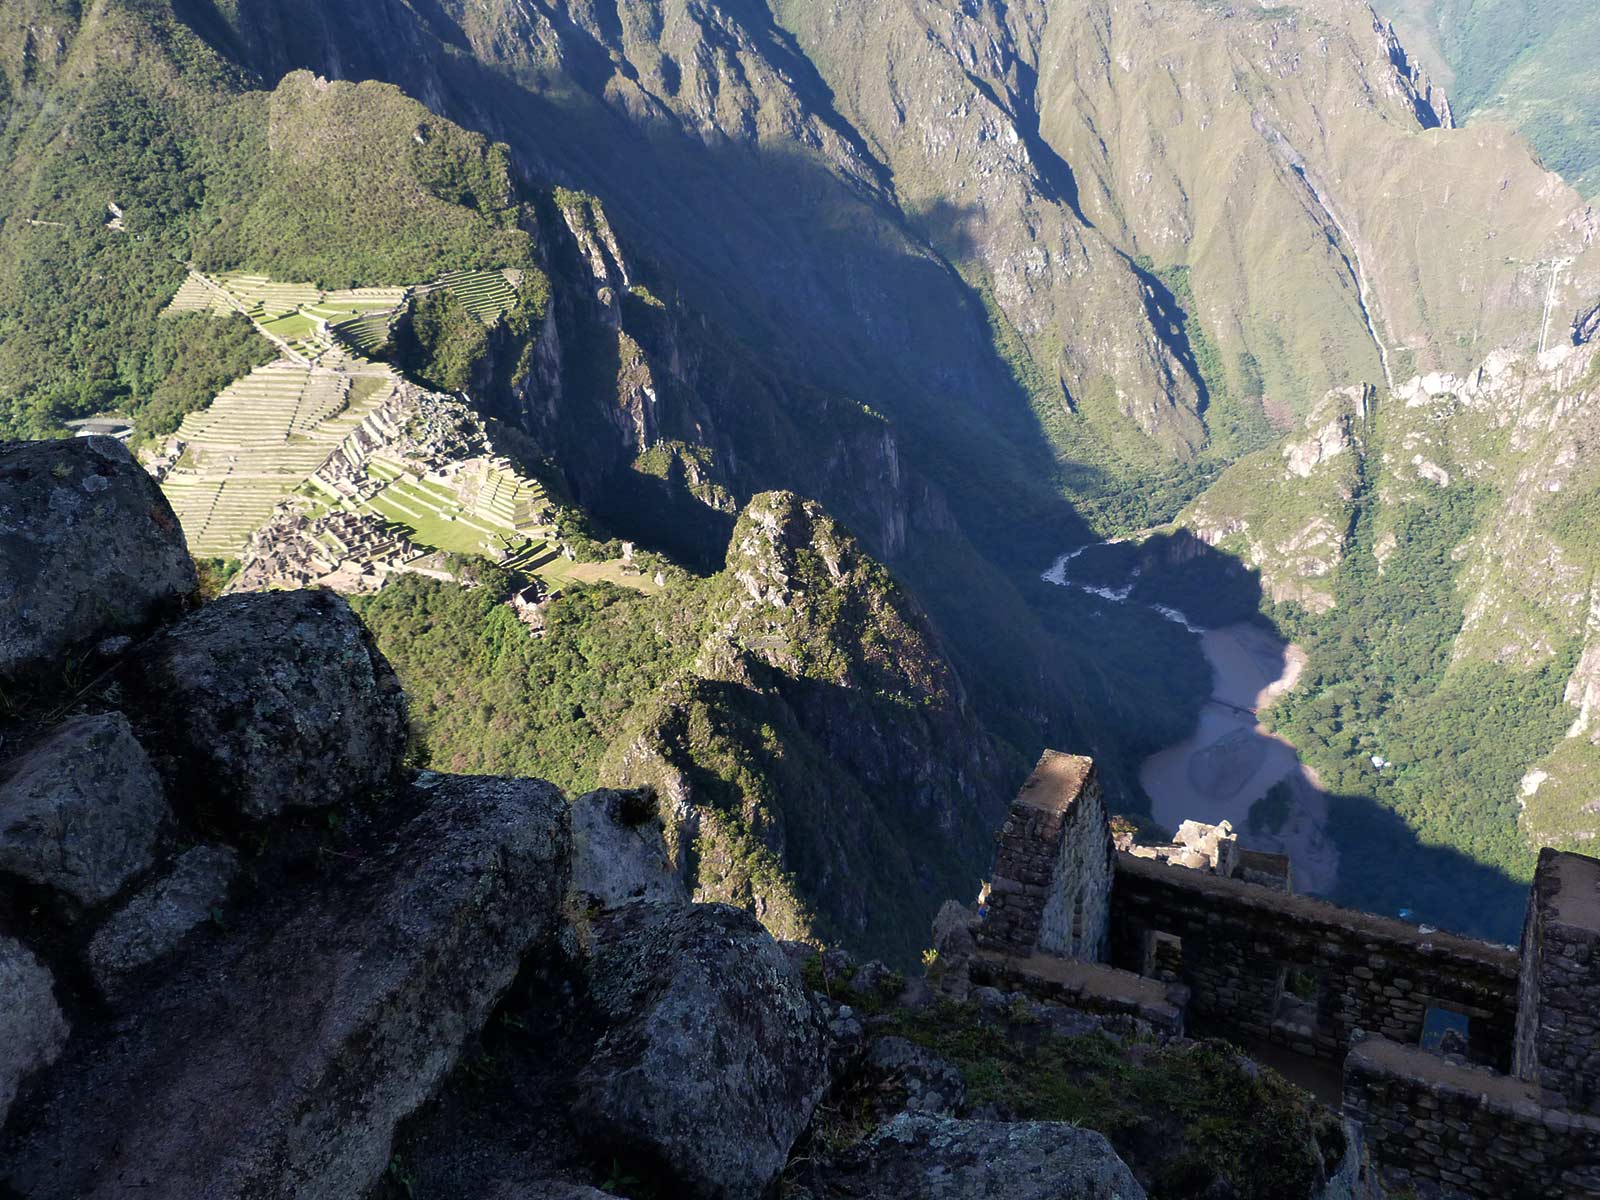 Day 5: Visiting Machu Picchu Sanctuary